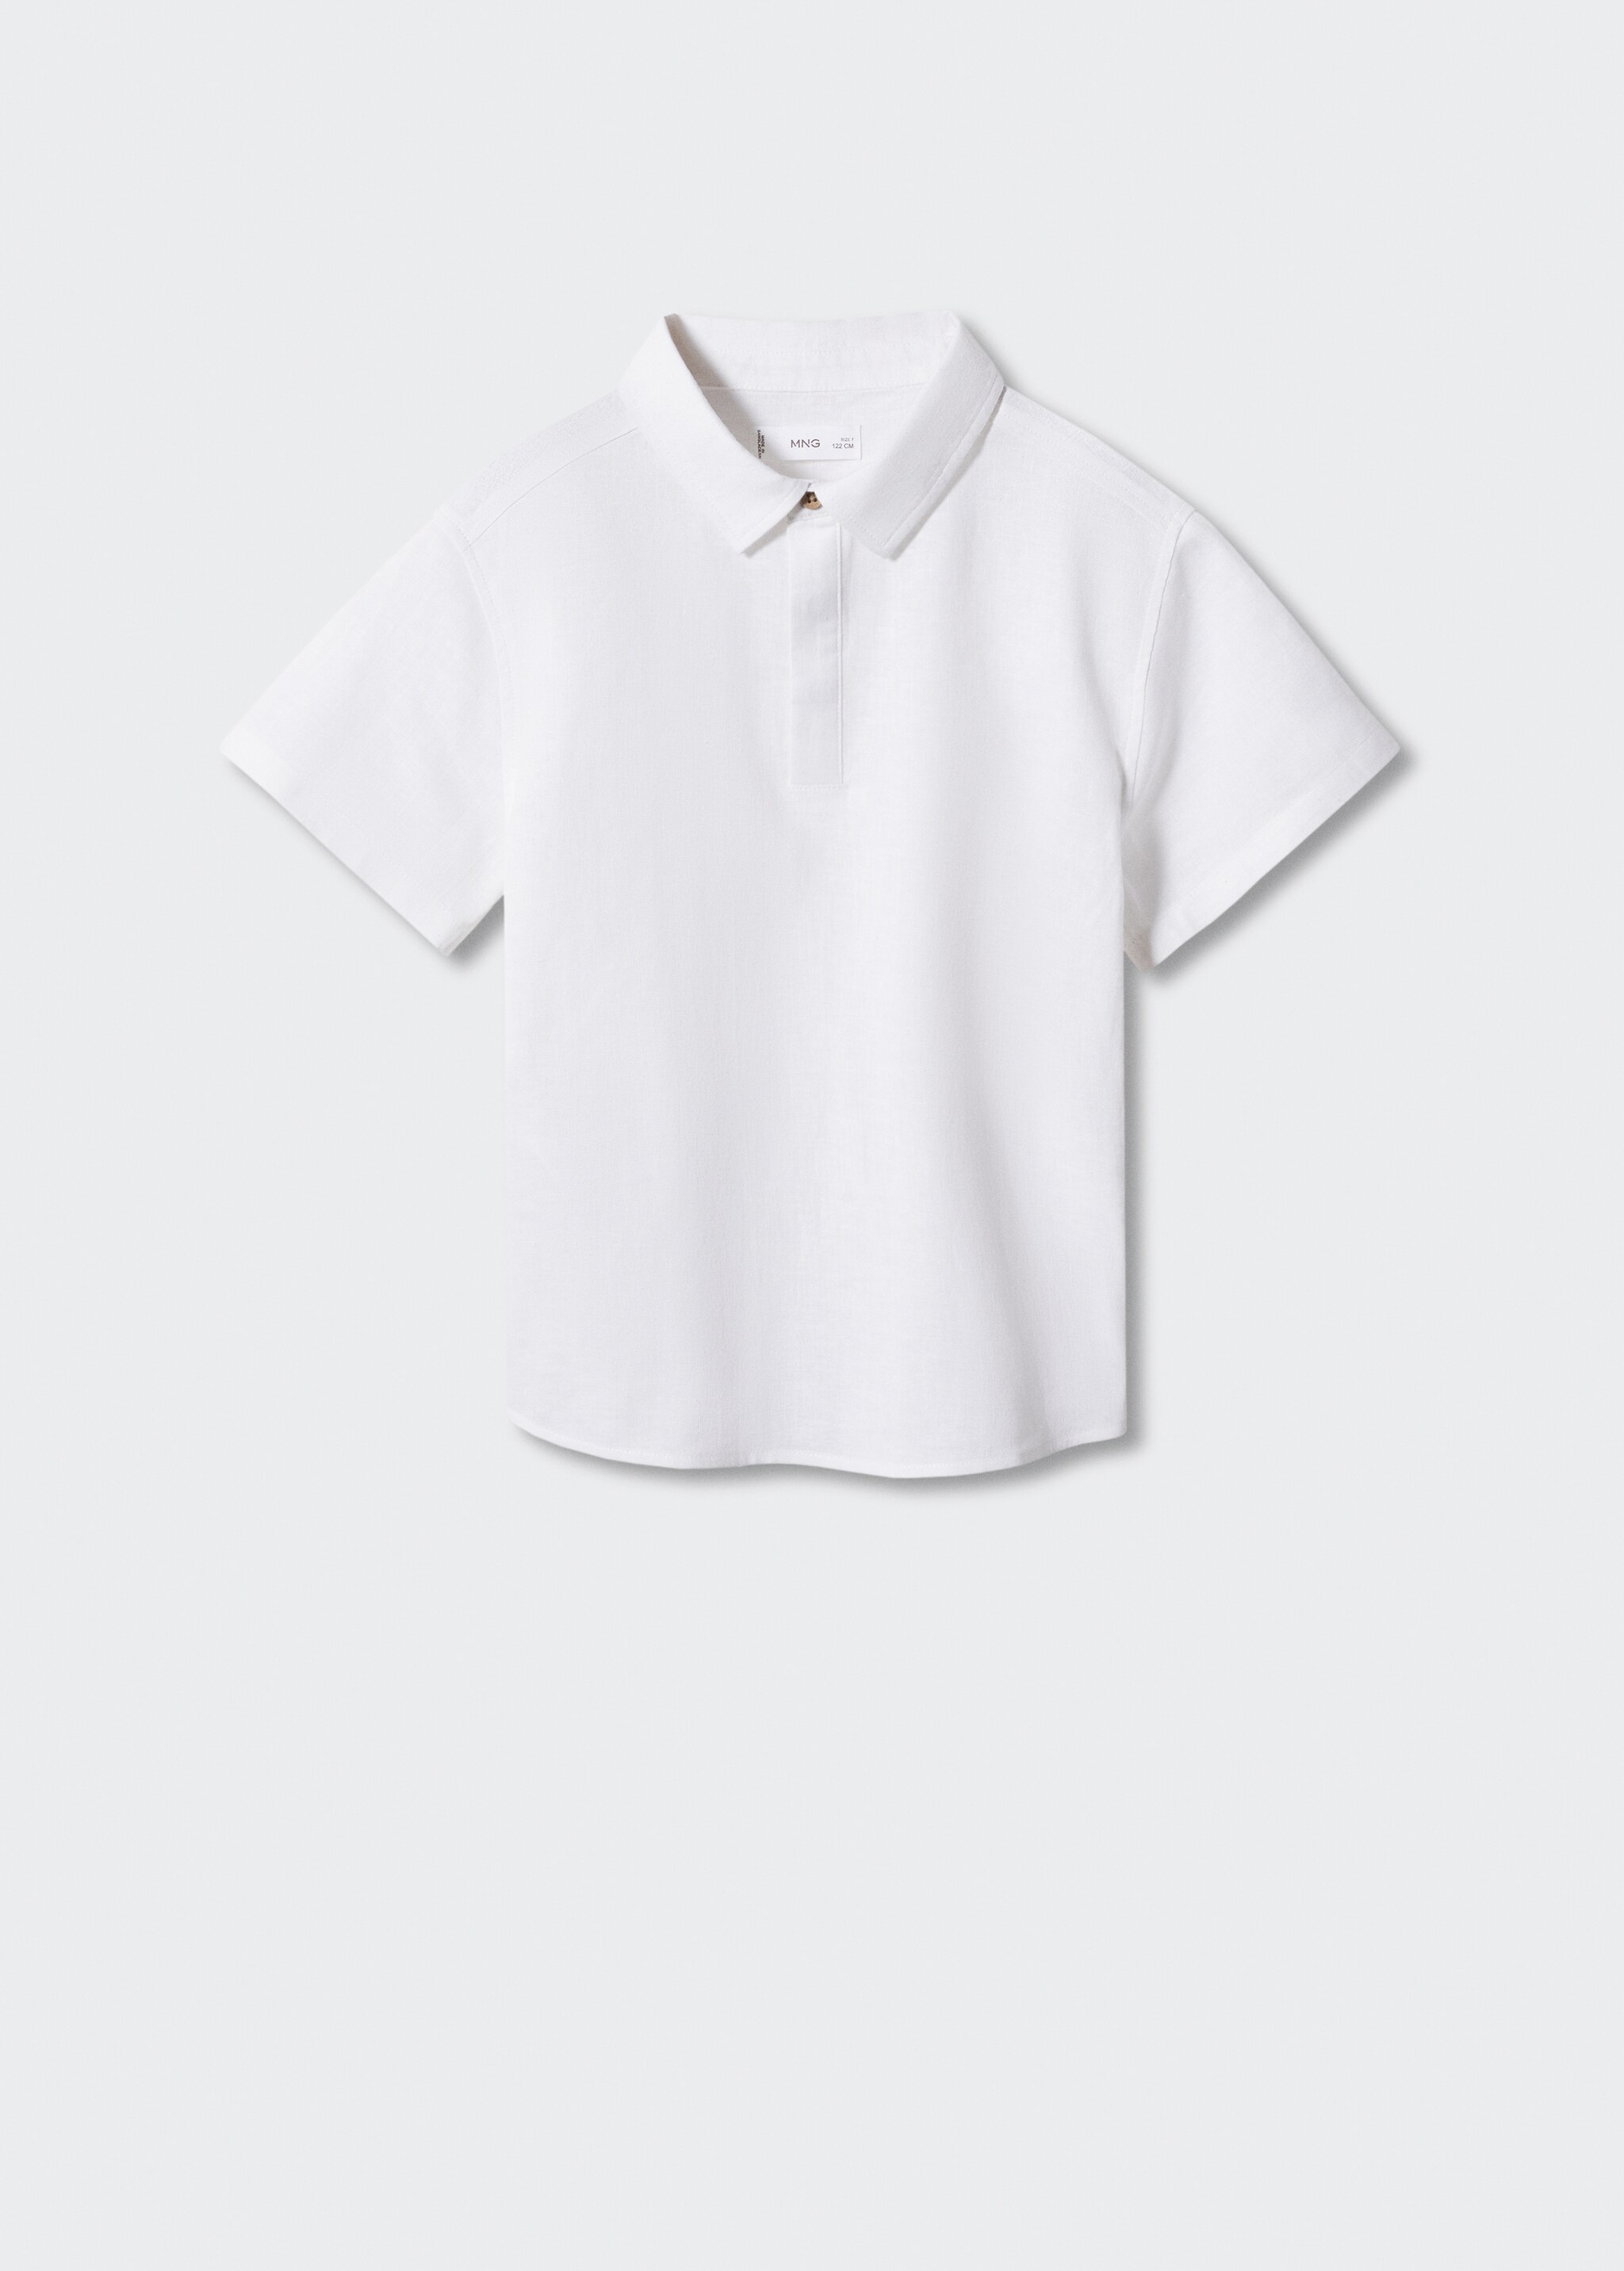 Short sleeve linen-blend shirt - Article without model